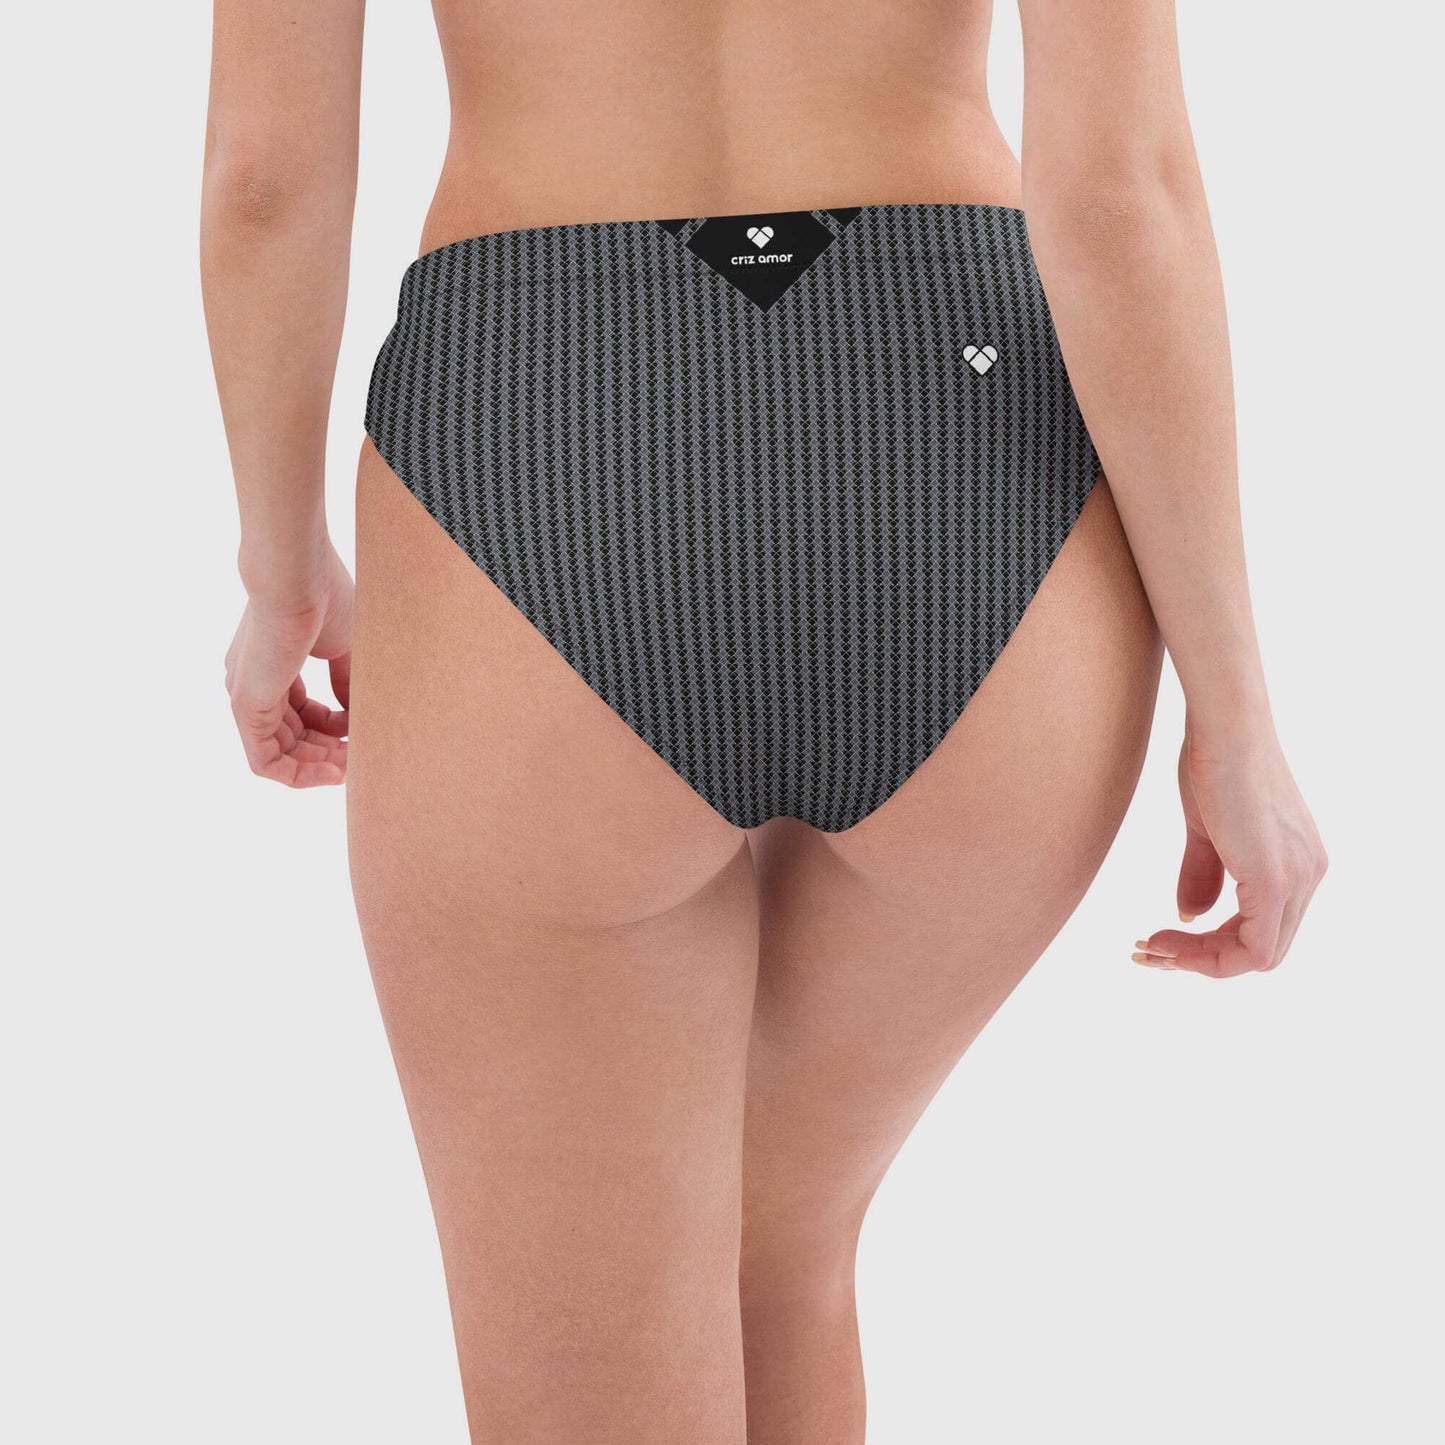 Lovogram-patterned black bikini bottoms by CRiZ AMOR